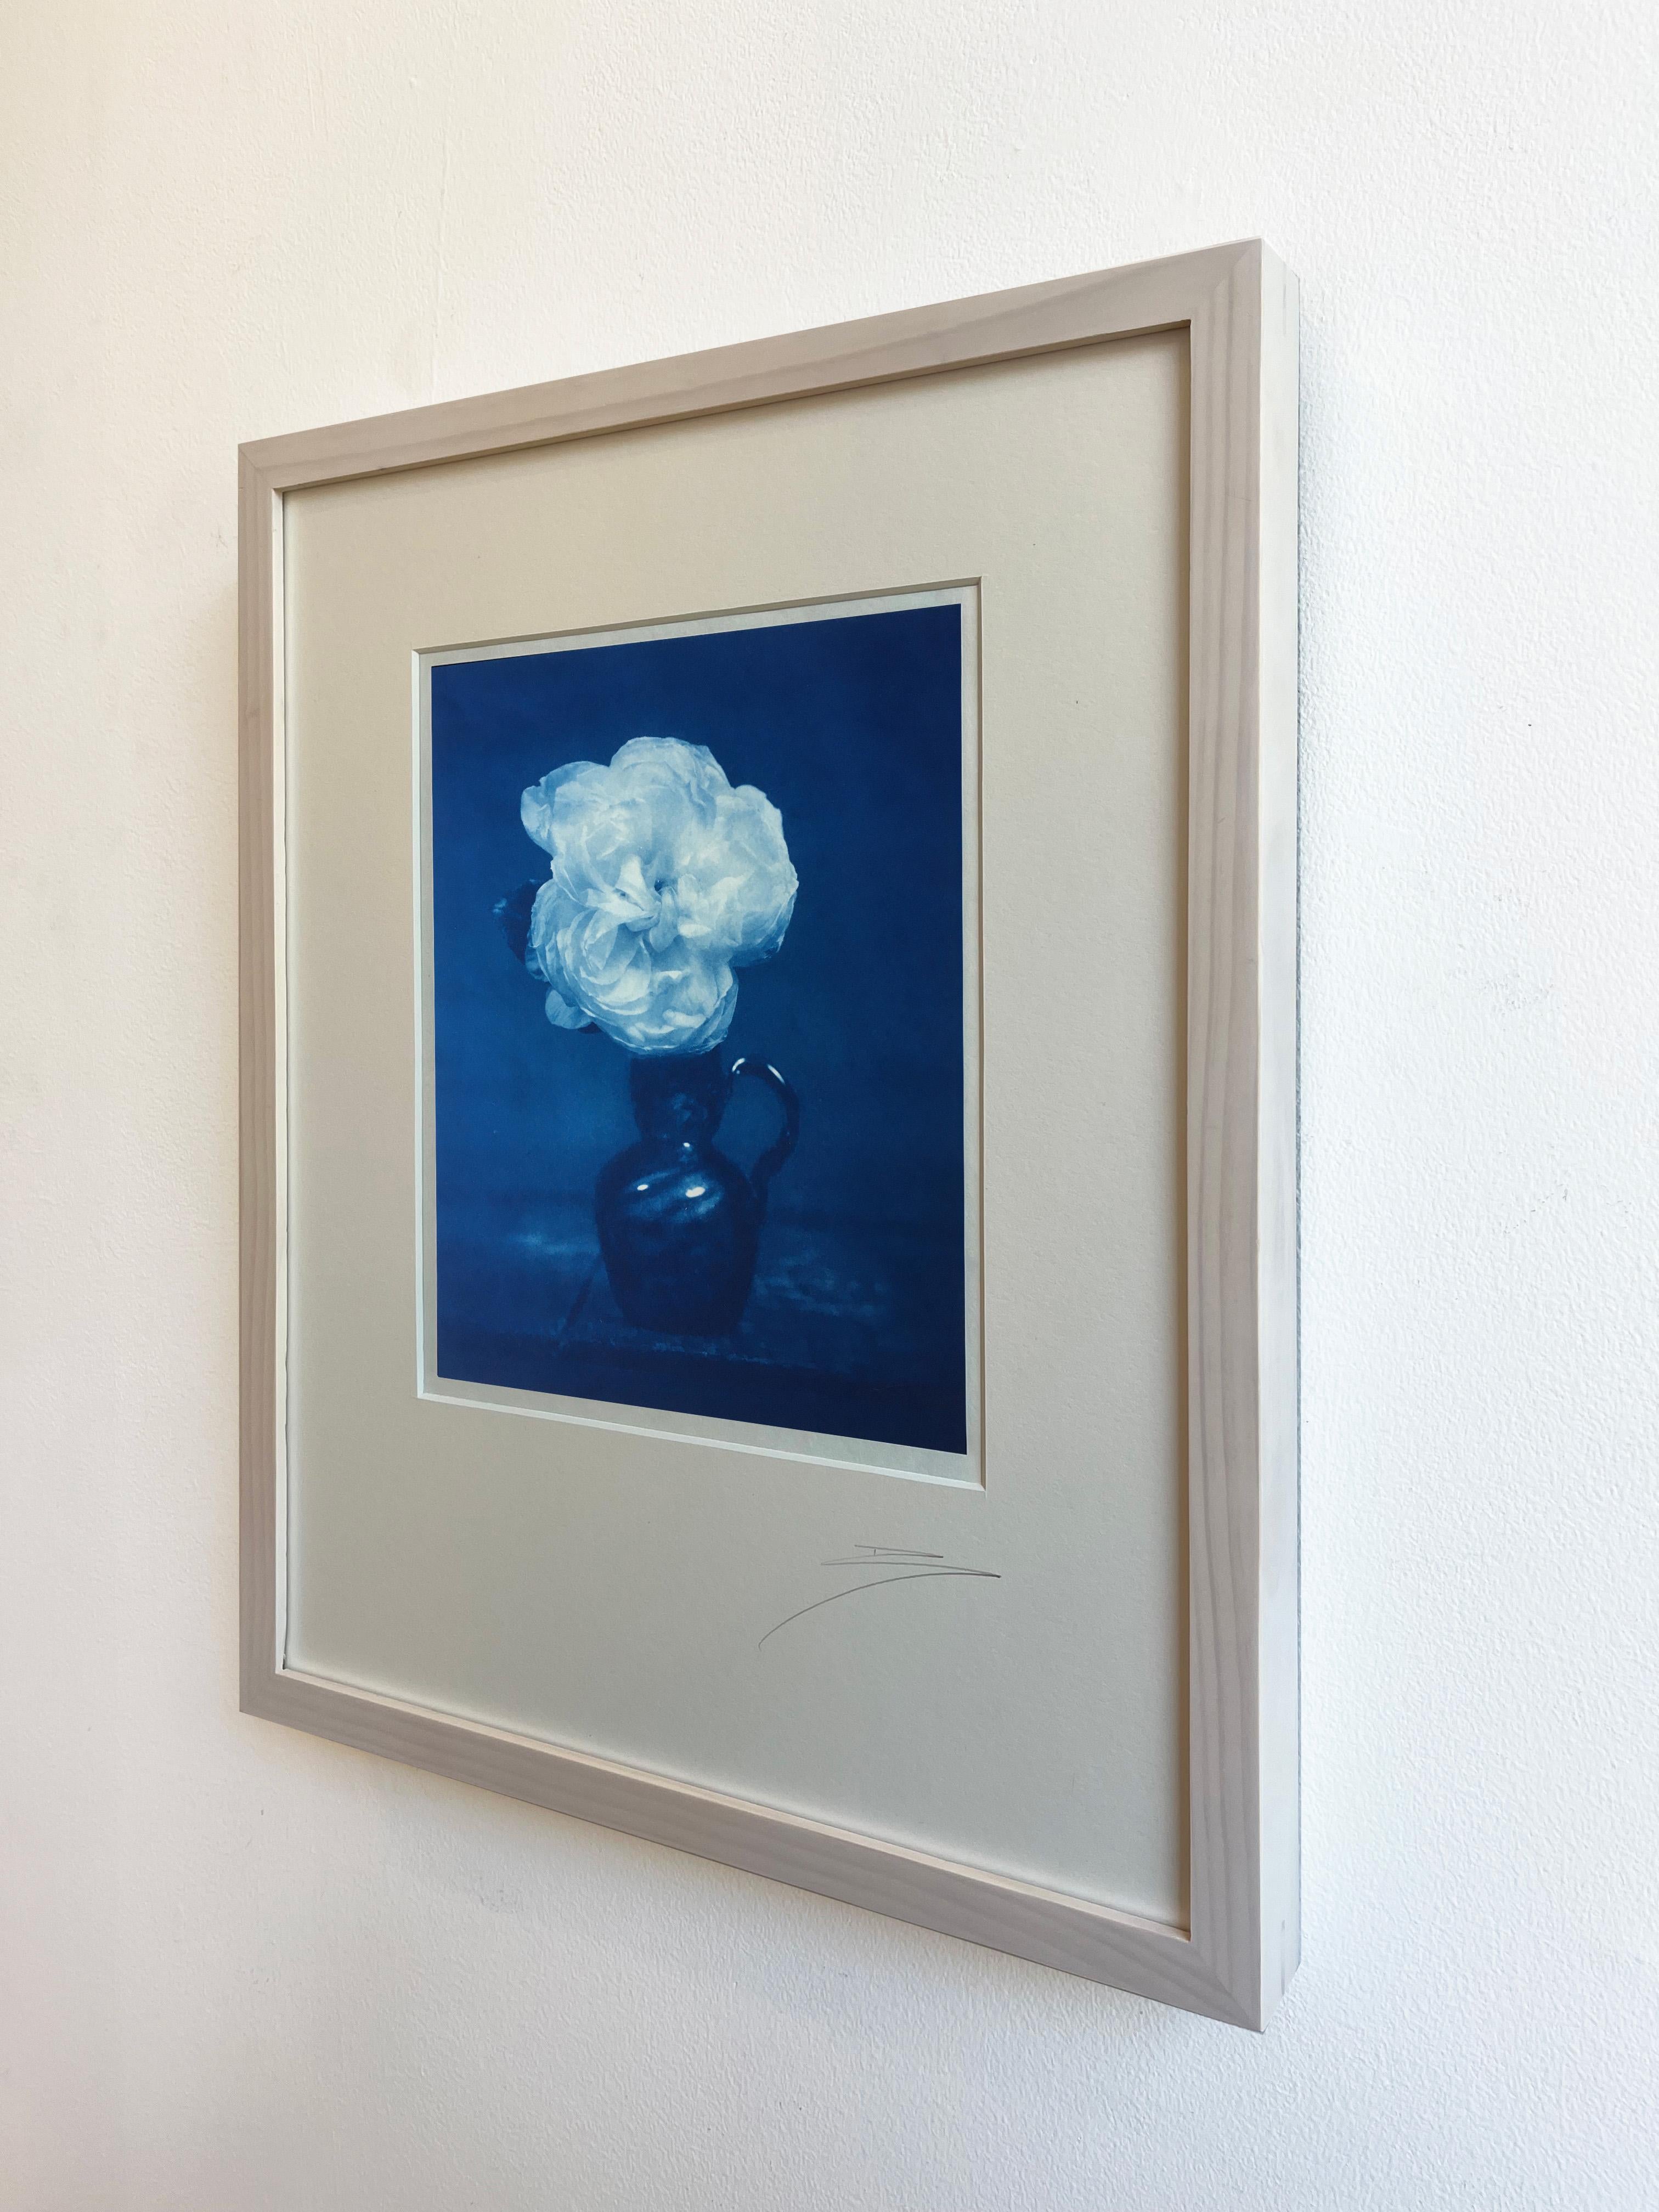 Rose in Blue Glass Vase (Romantic Still Life Cyanotype Still Life Photo, Framed) - Contemporary Print by David Sokosh